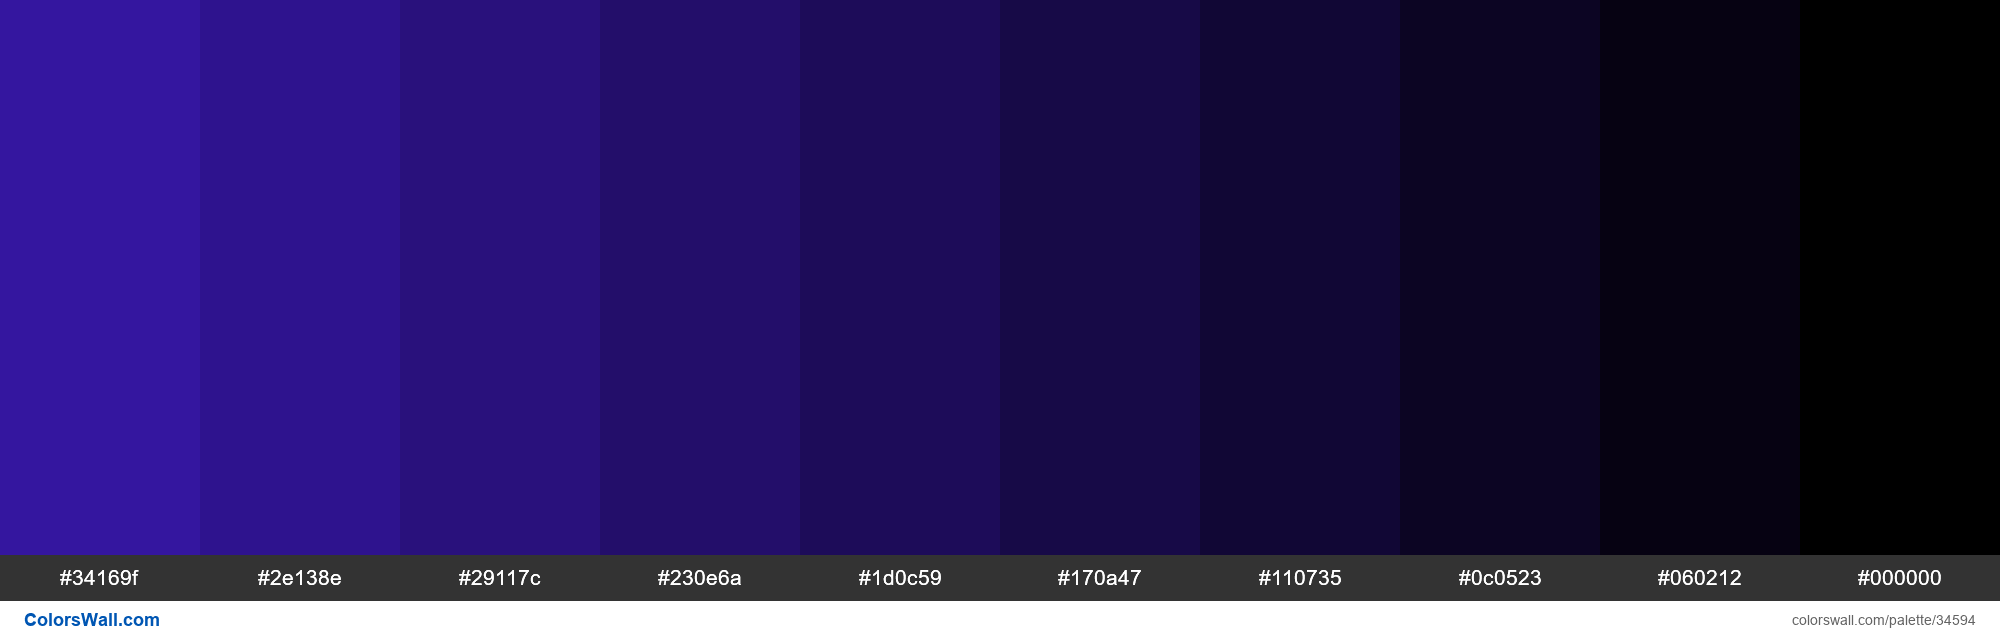 Shades XKCD Color indigo blue #3a18b1 hex colors palette - ColorsWall